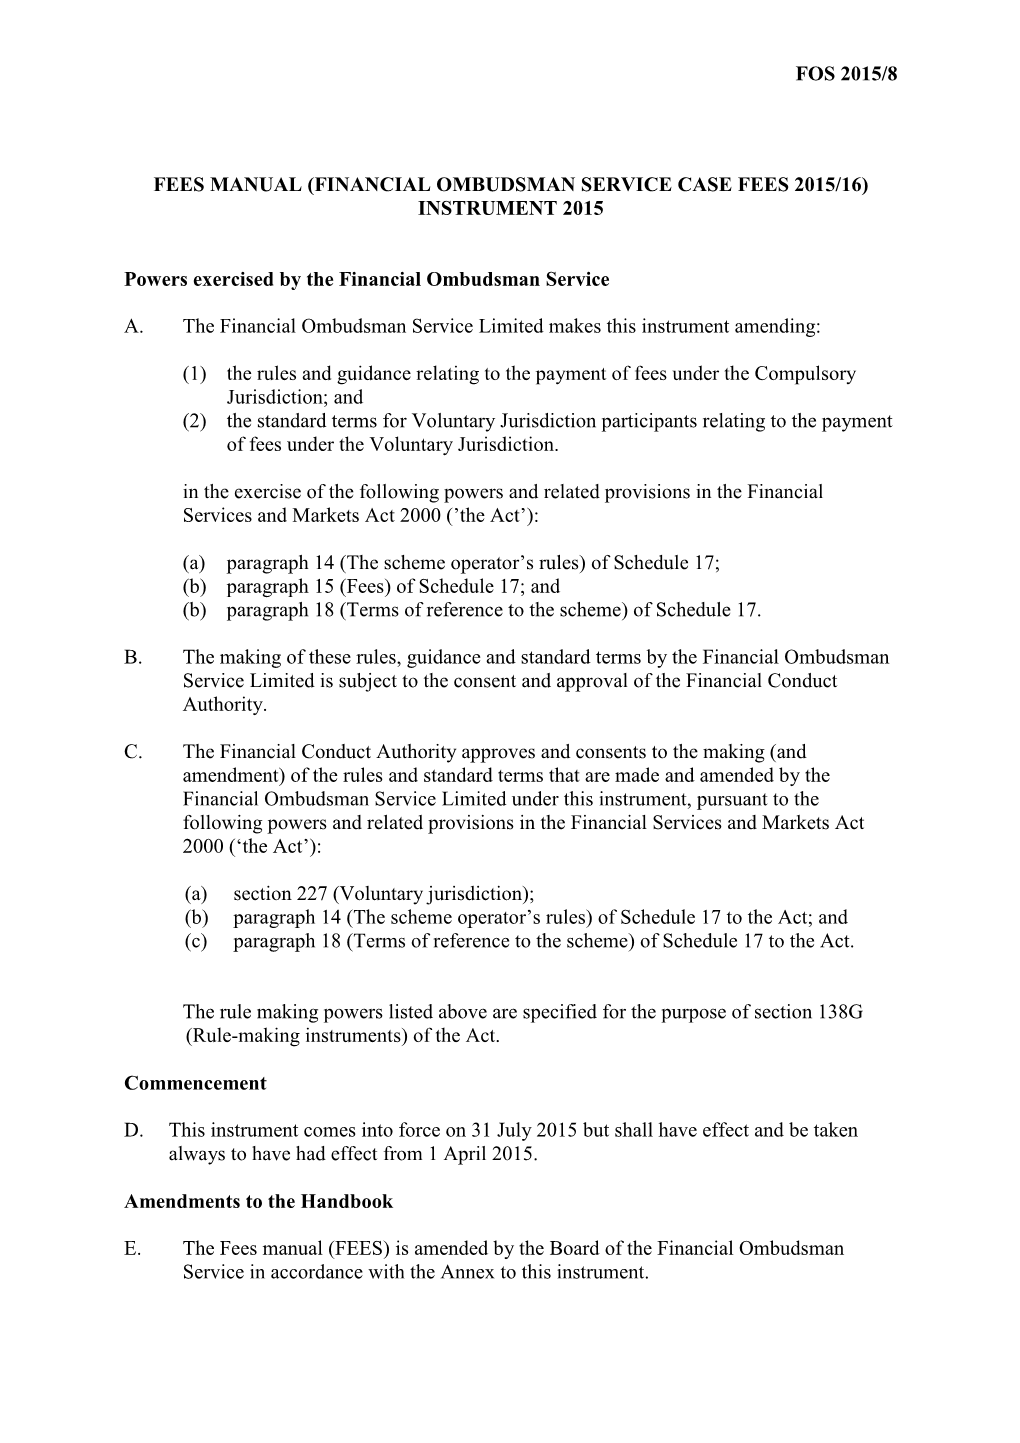 Financial Ombudsman Service Case Fees 2015/16) Instrument 2015